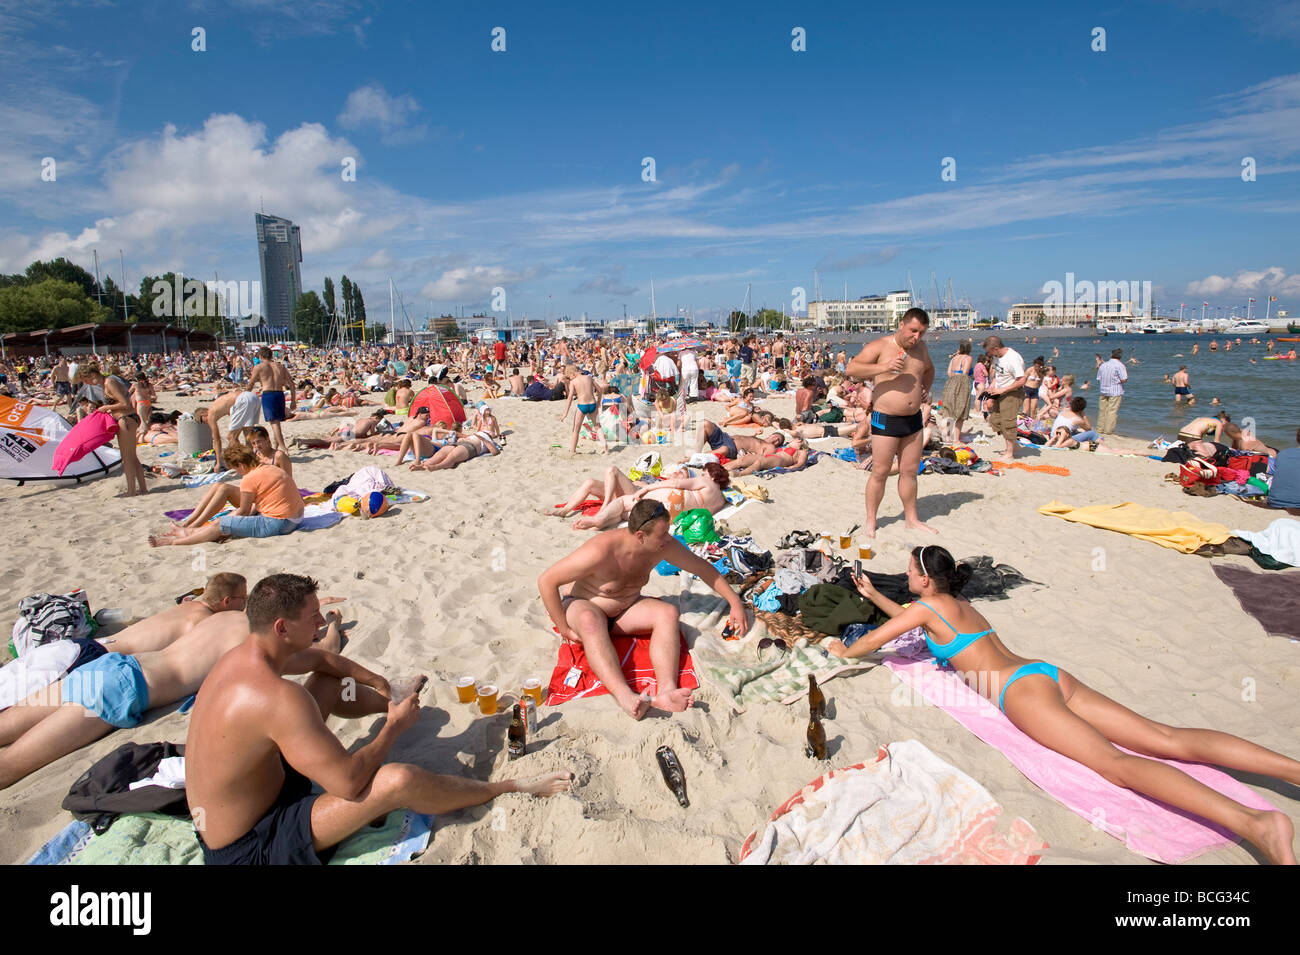 People sunbathing on sandy beach Baltic Sea Gdynia Poland Stock Photo